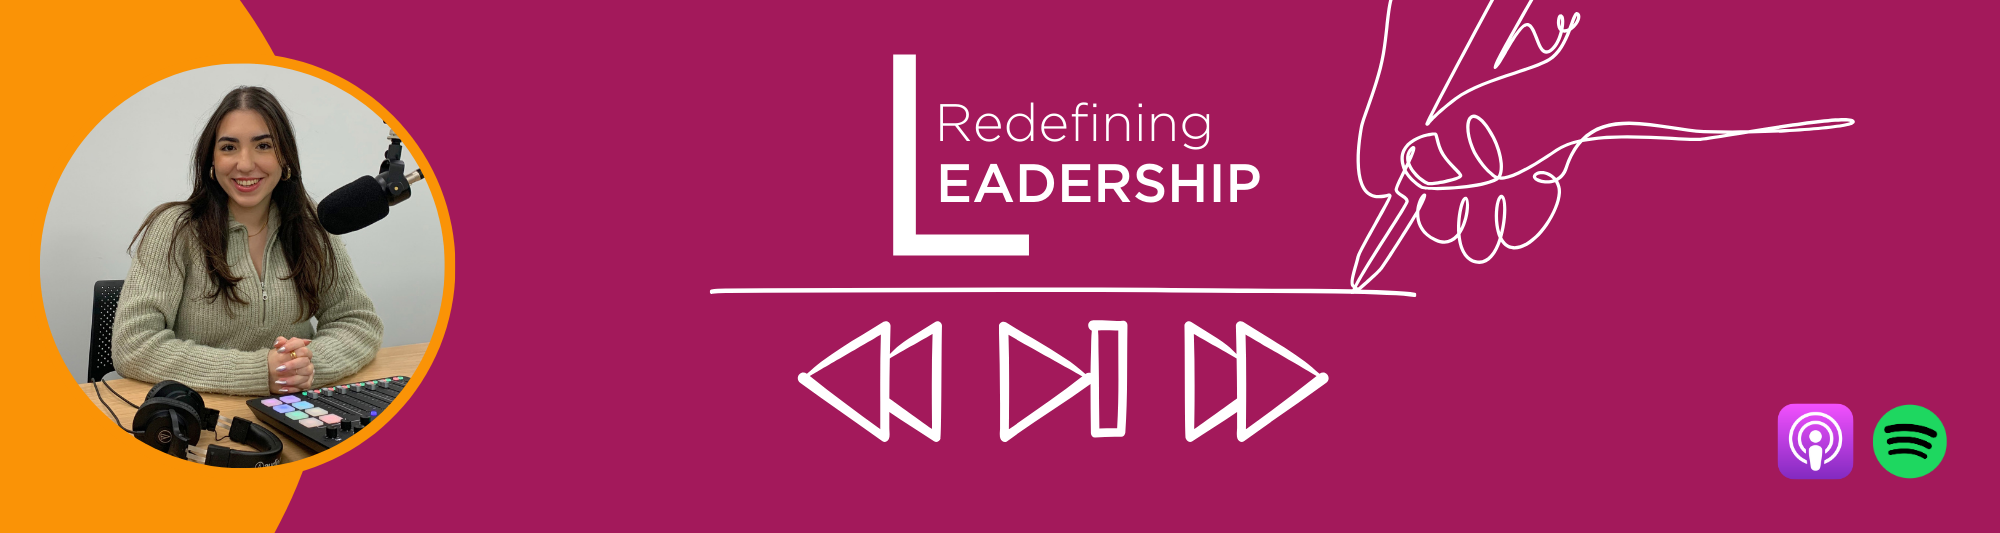 Redefining Leadership Banner